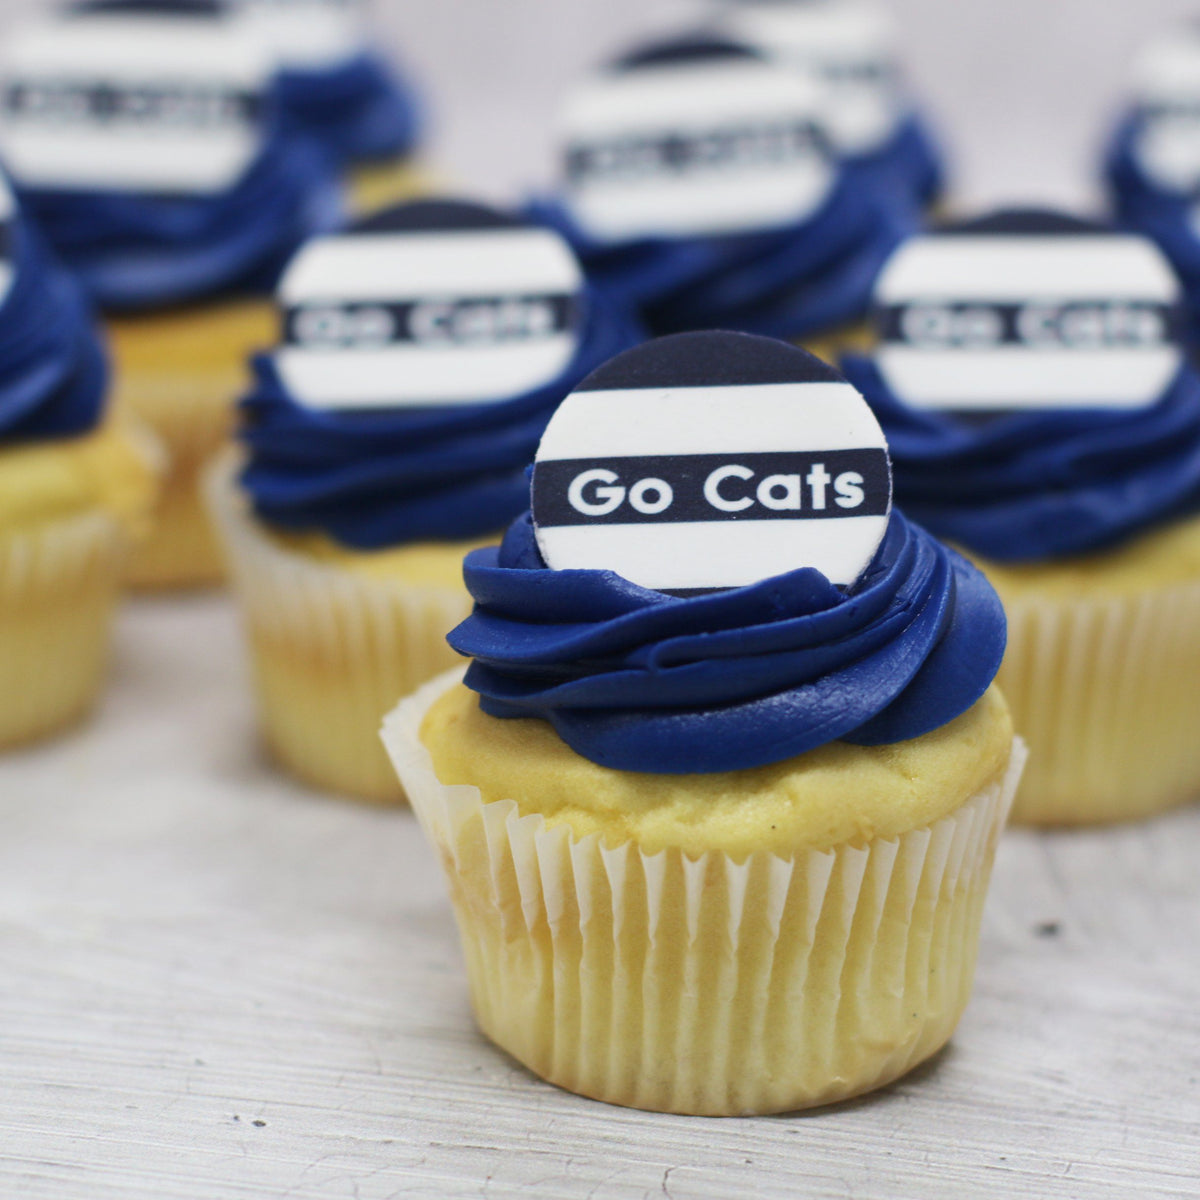 Go Cats - Football Cupcakes Cupcakes The Cupcake Queens 